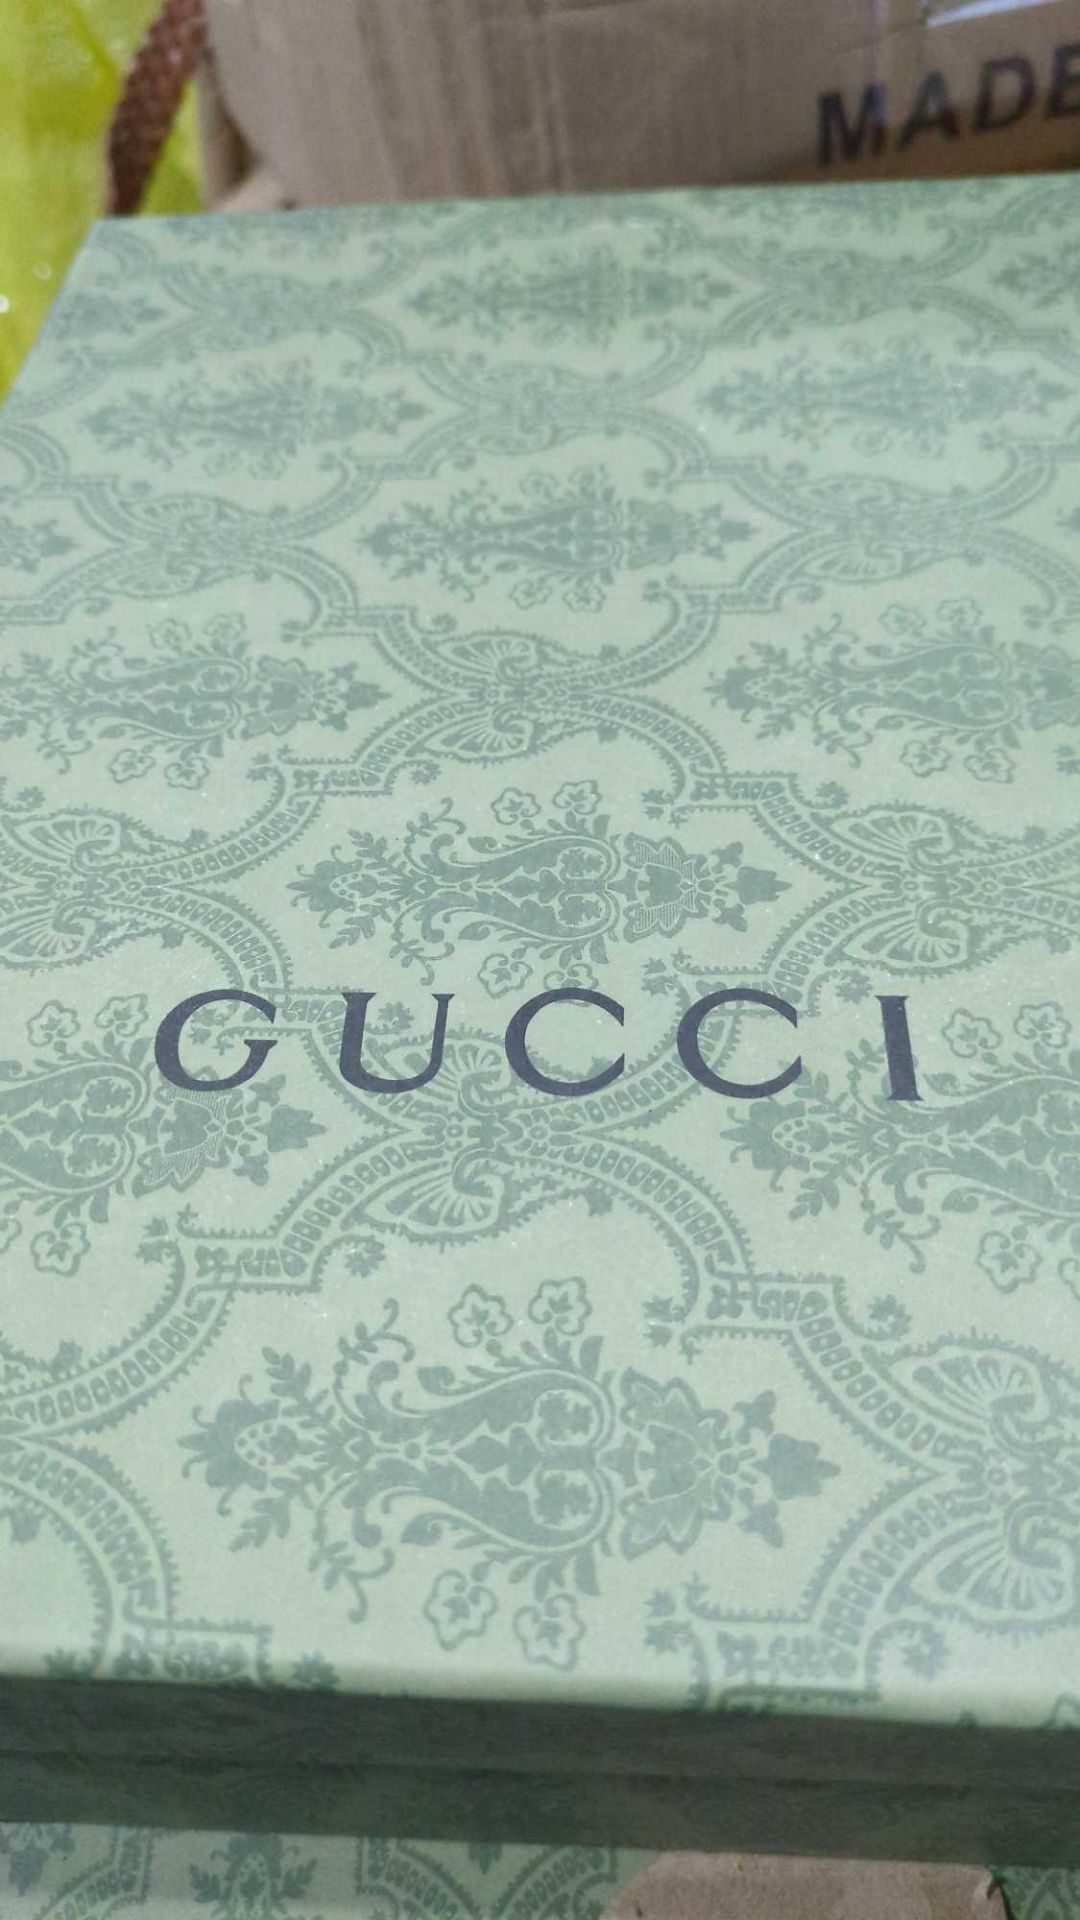 Pallet- Replica Gucci shoes, furniture piece, belts, hand lotions, turmeric body scrub, foam brick,